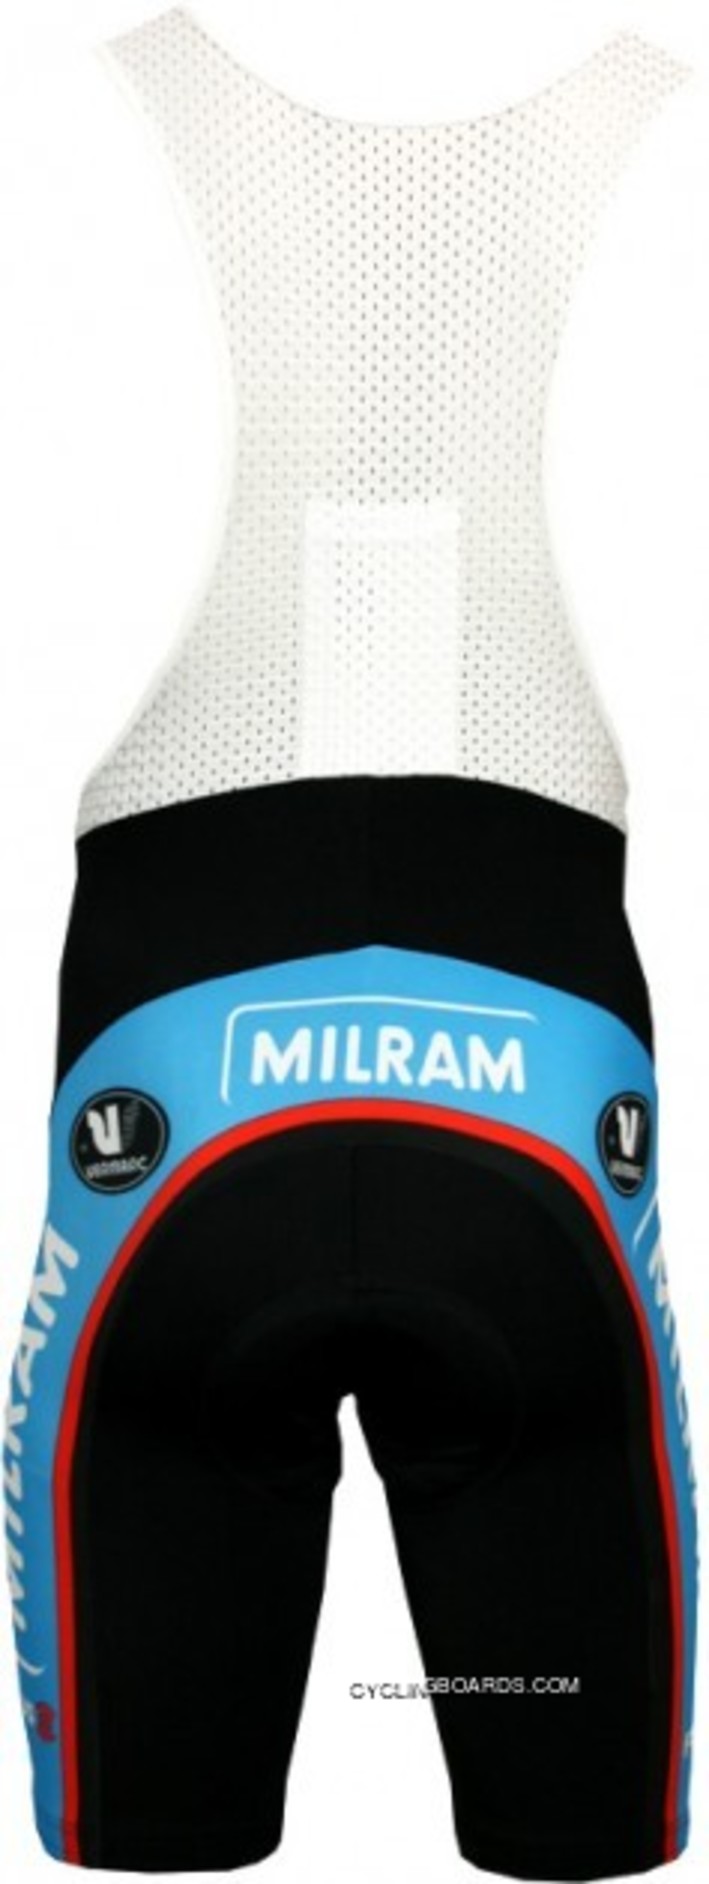 Milram 2010 Cycling Bib Shorts Tj-650-9328 Outlet